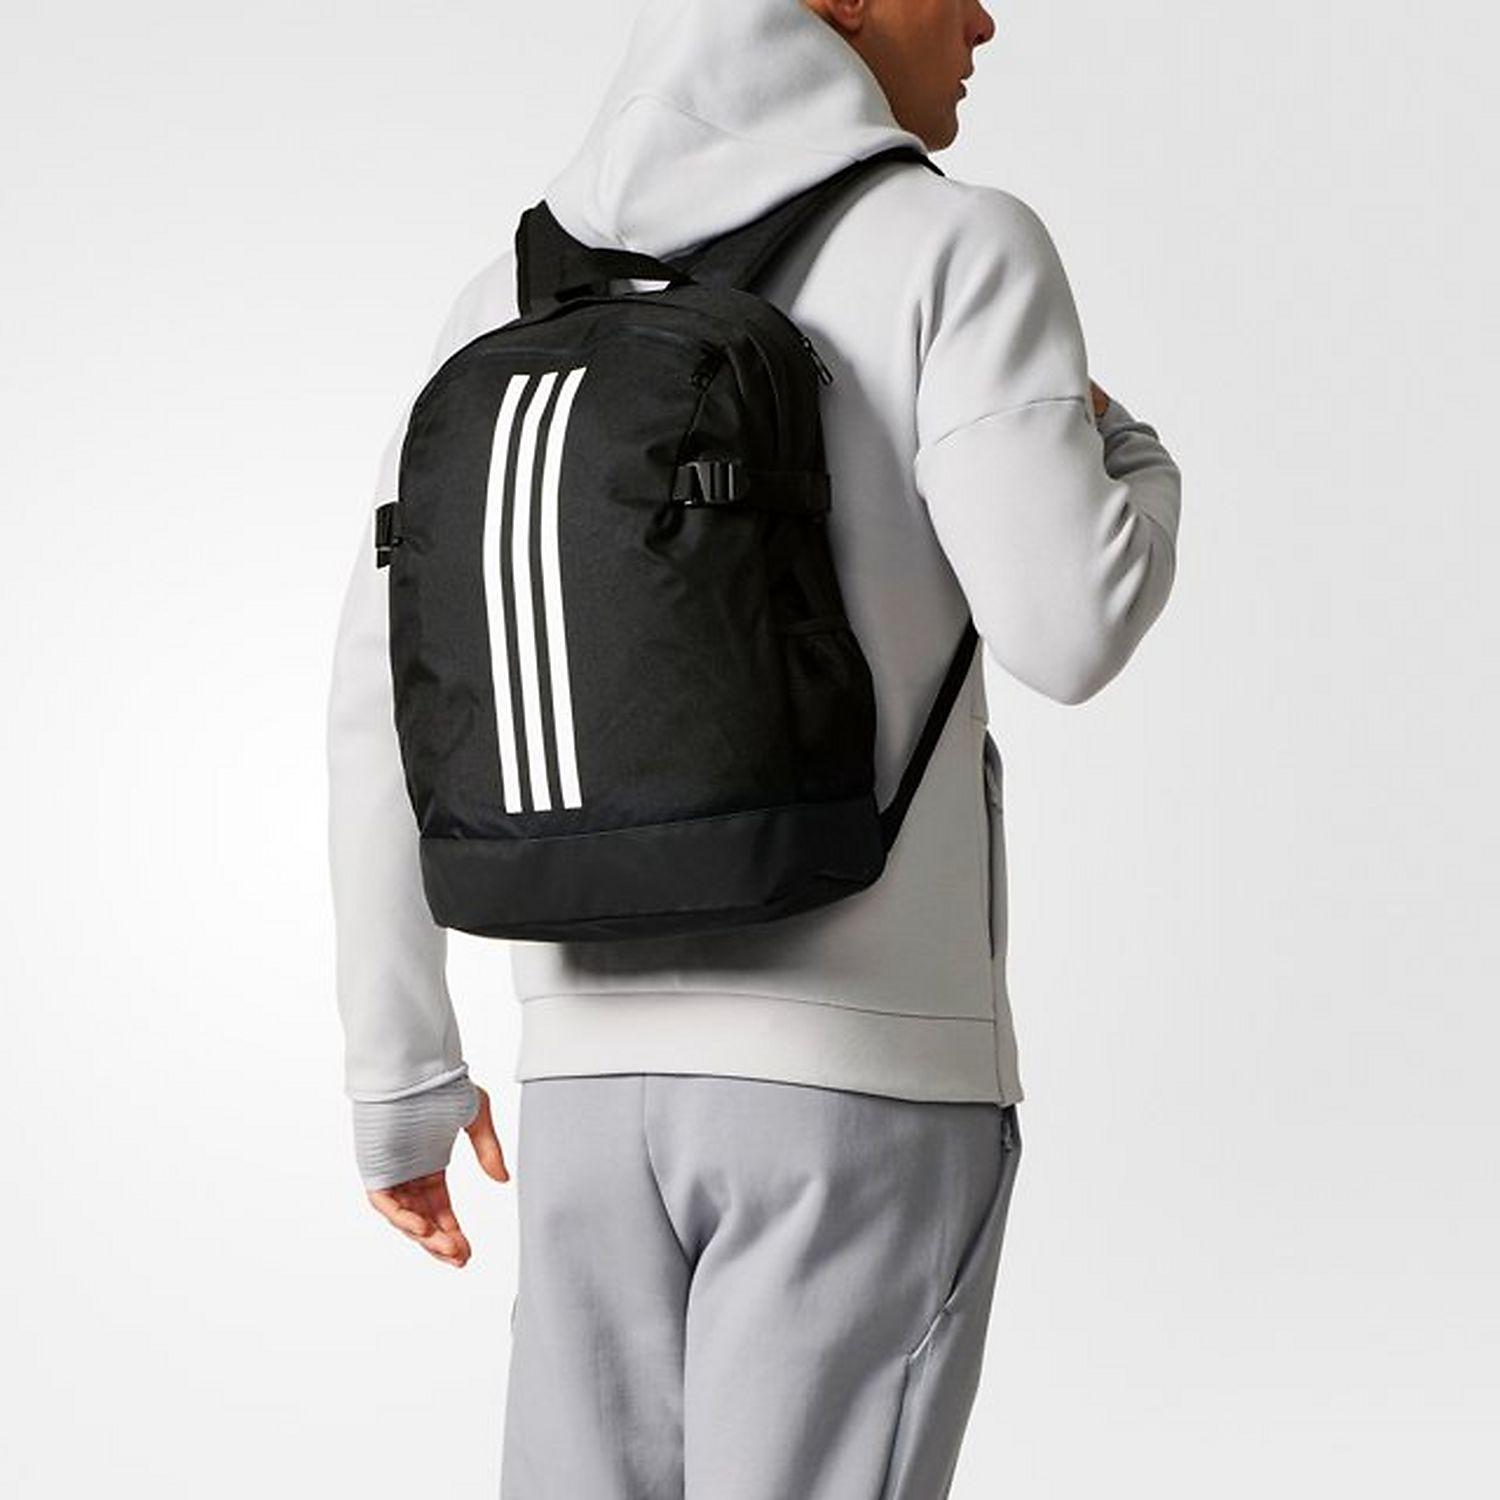 adidas backpack medium